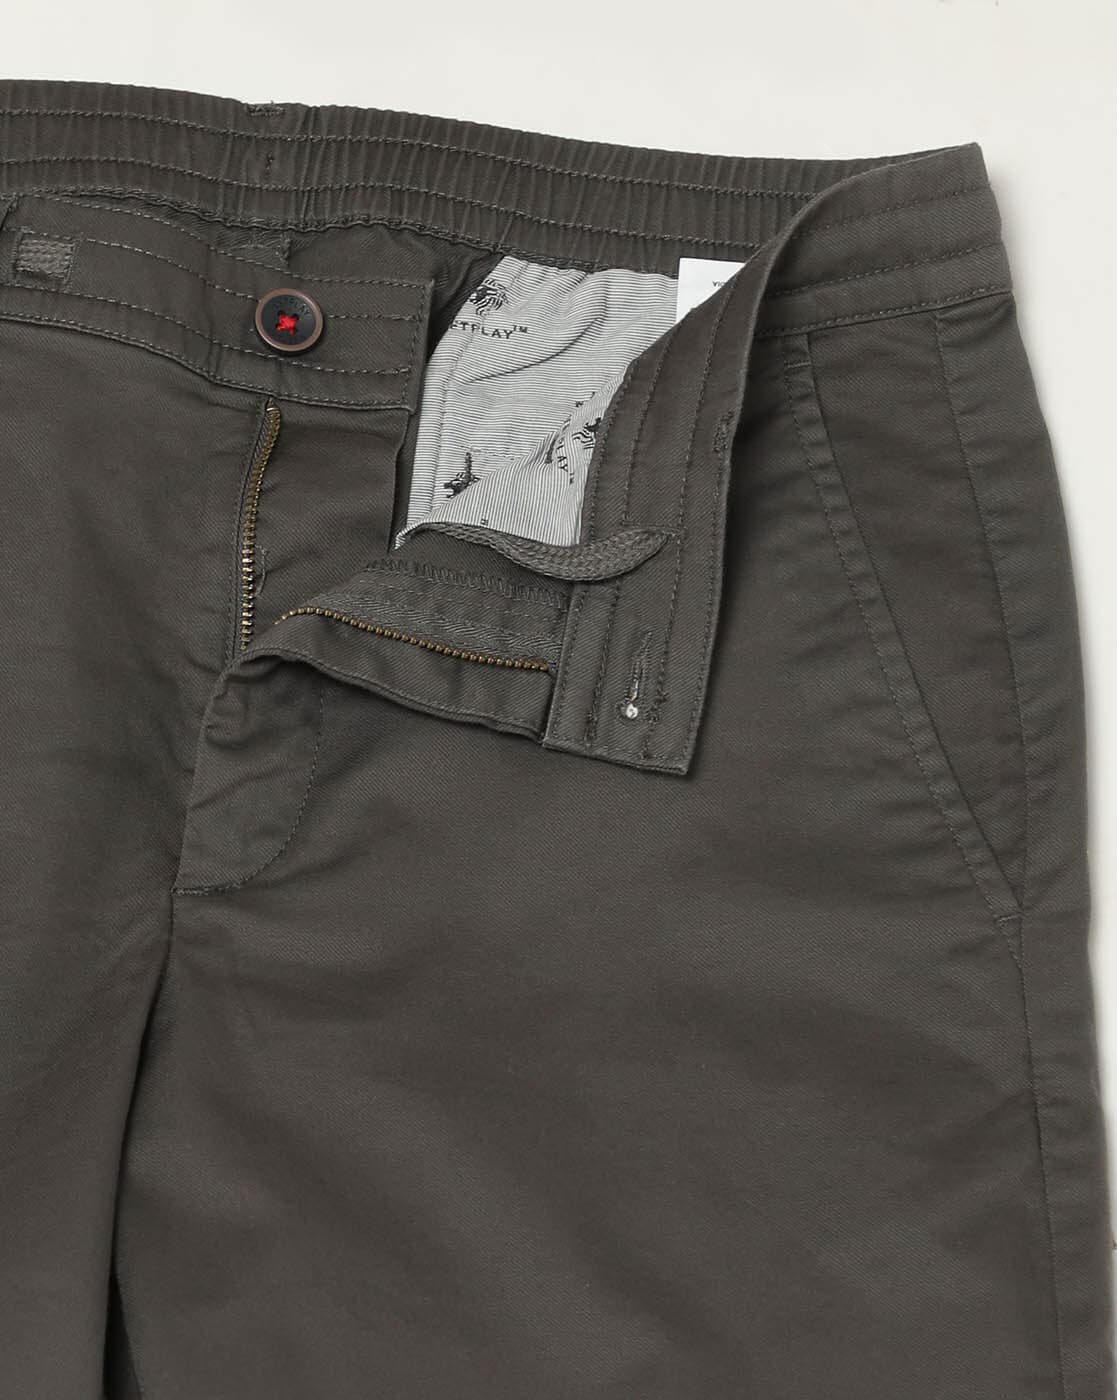 Wearing Black Blazer Gray Pants Brown Stock Photo 297805406 | Shutterstock